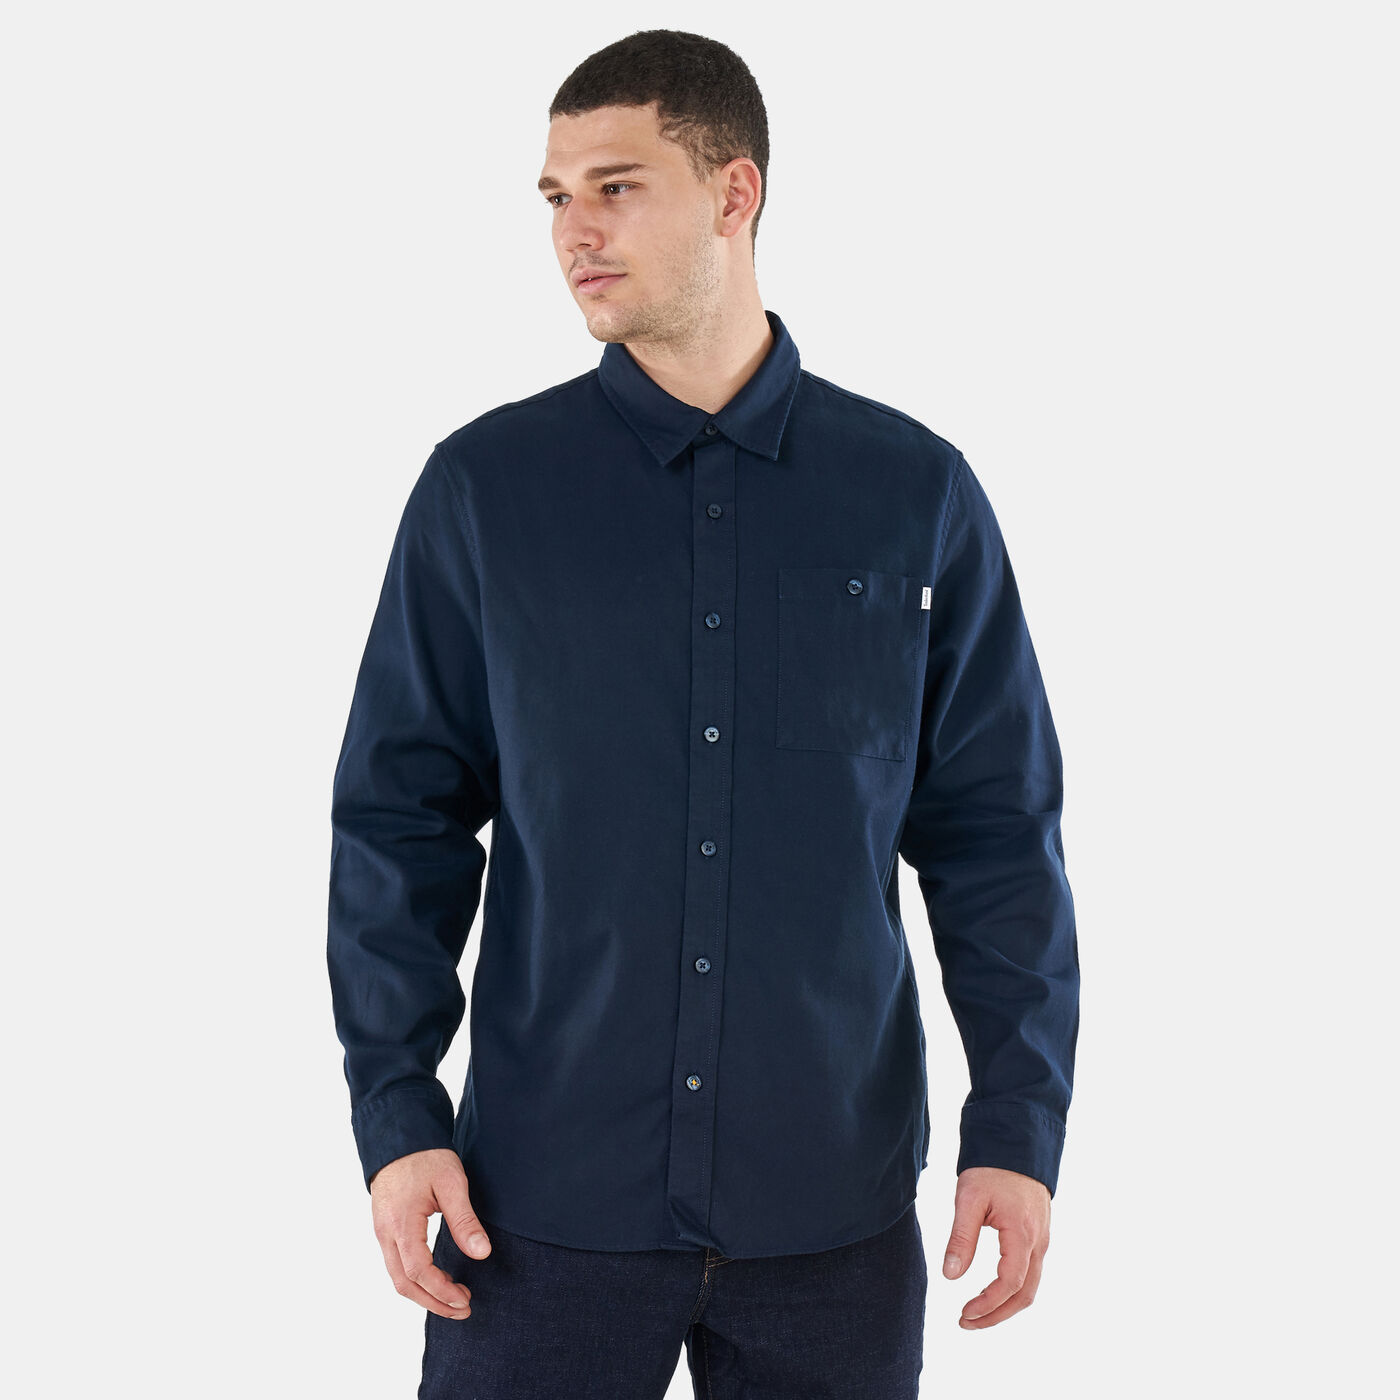 Men's Soft Cotton Solid Long Sleeve Shirt